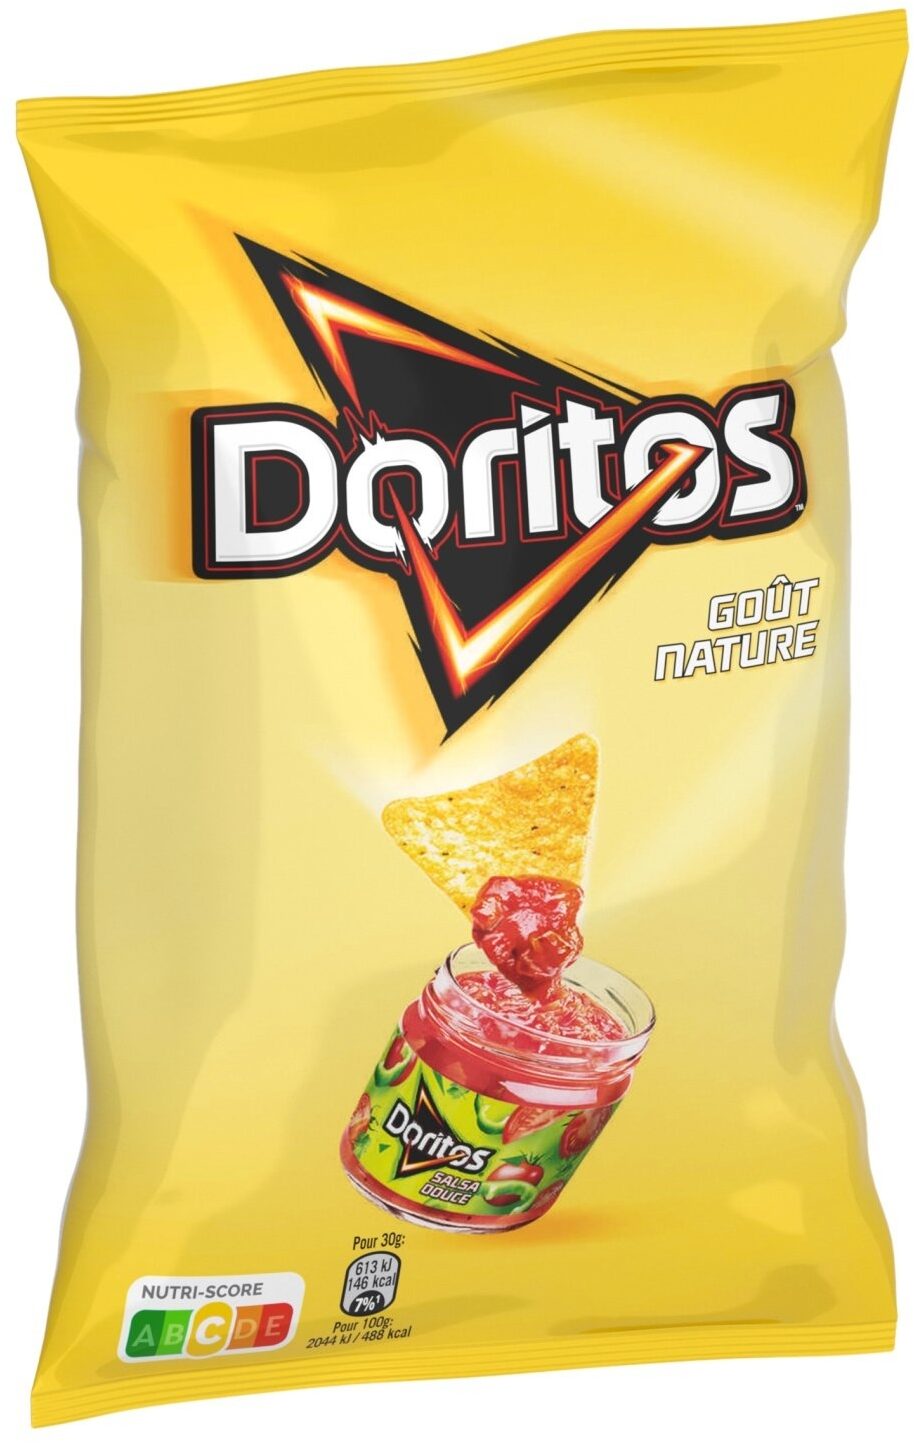 Doritos - Product - fr